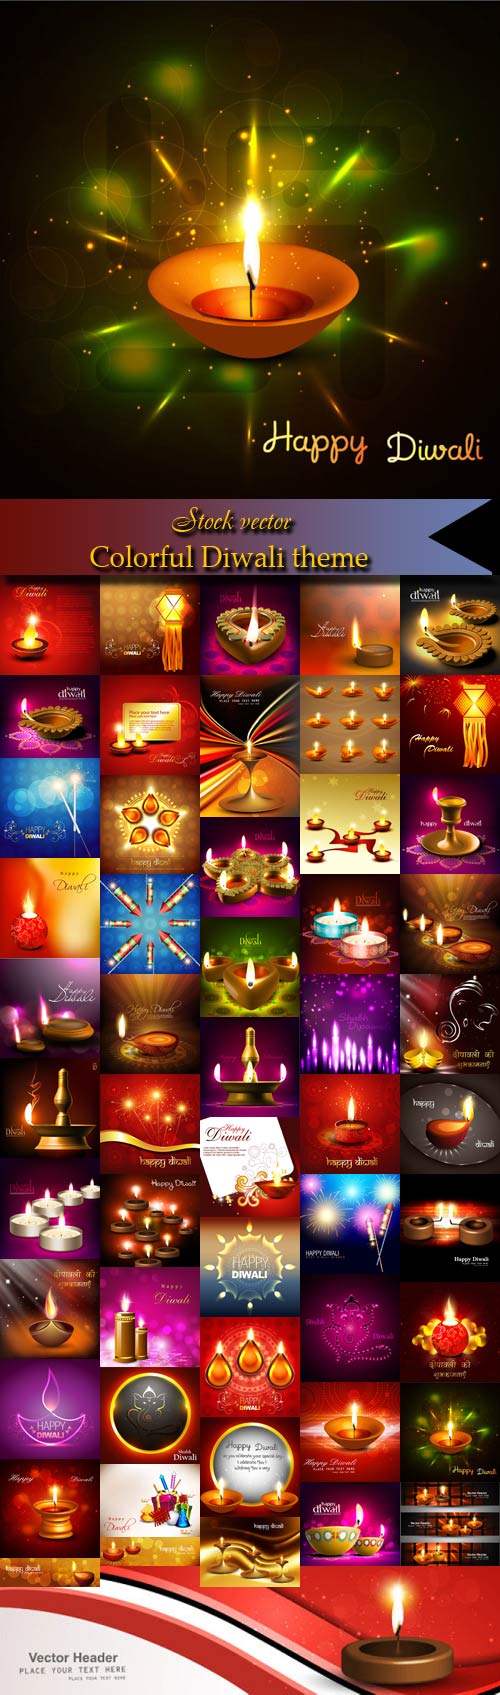 Colorful Diwali theme vector